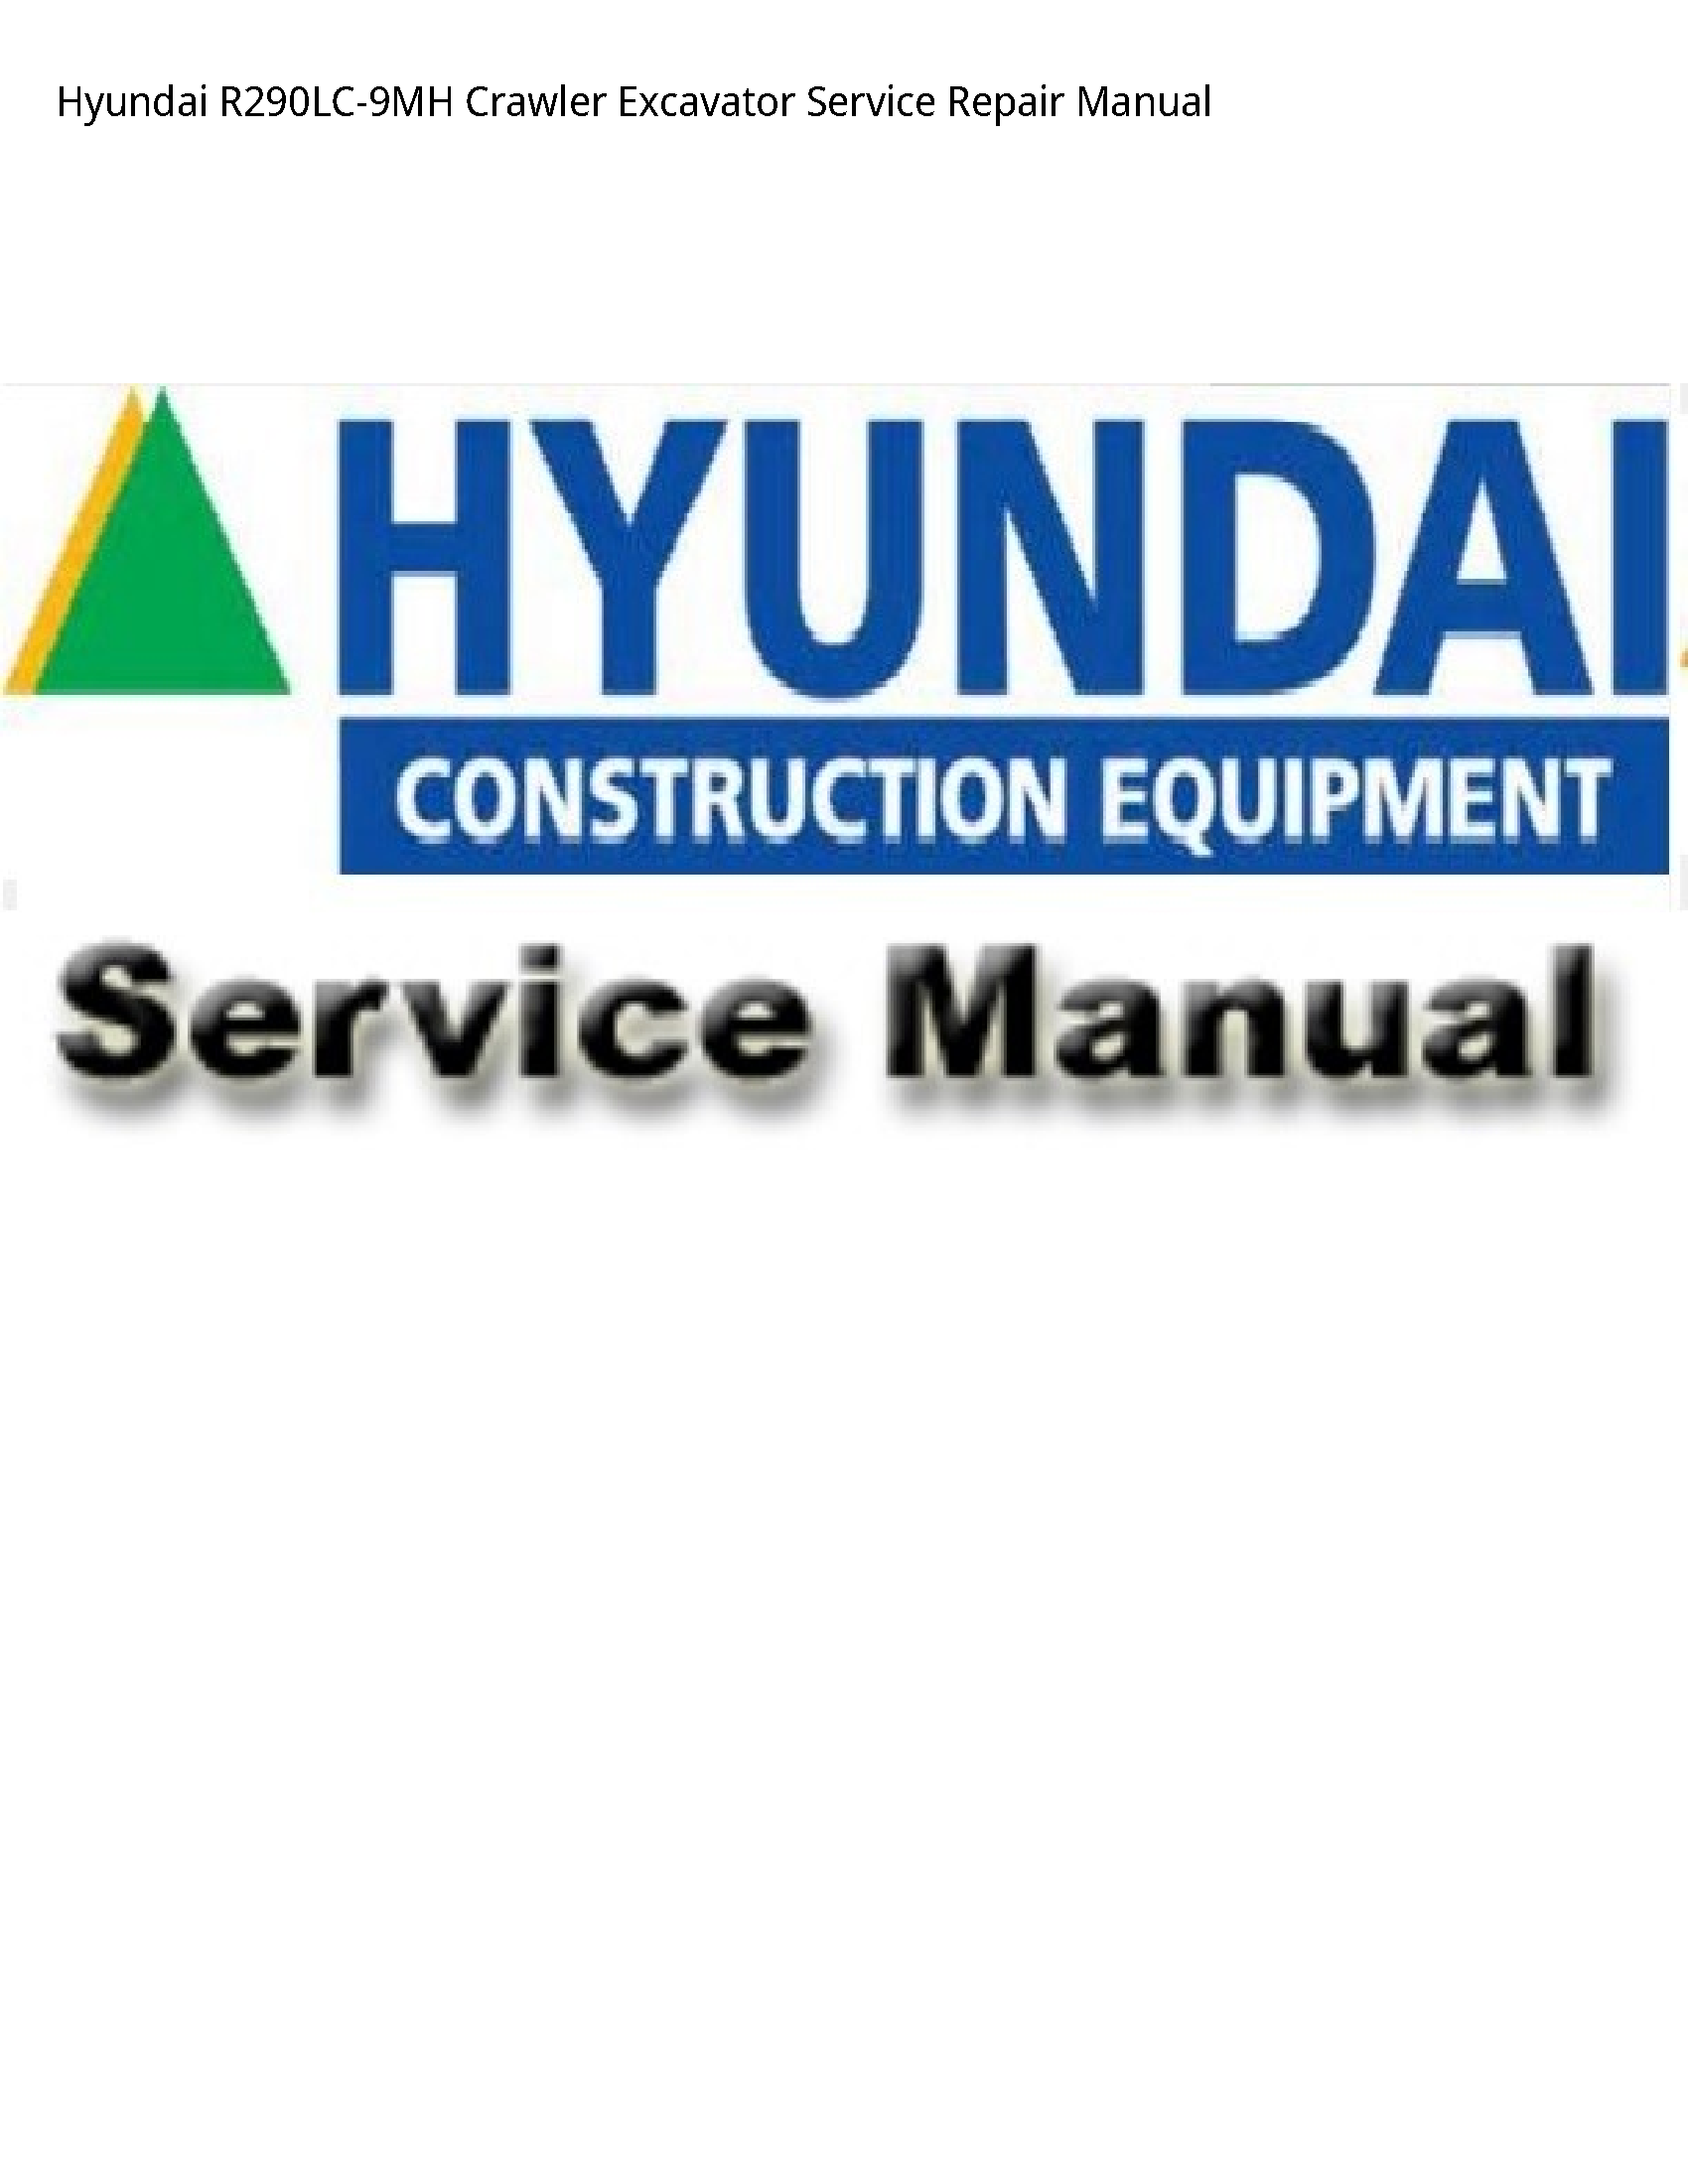 Hyundai R290LC-9MH Crawler Excavator manual